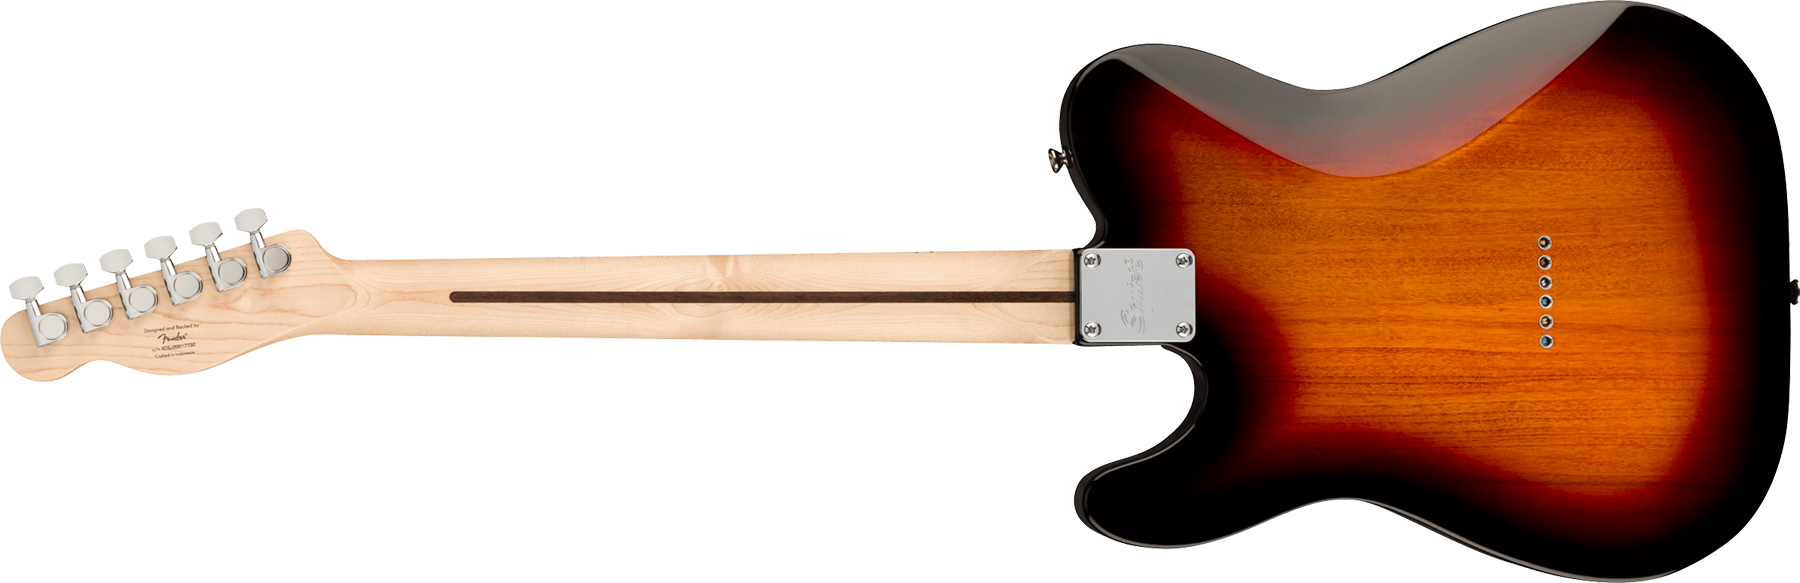 Squier Tele Affinity 2021 2s Mn - 3-color Sunburst - Televorm elektrische gitaar - Variation 1